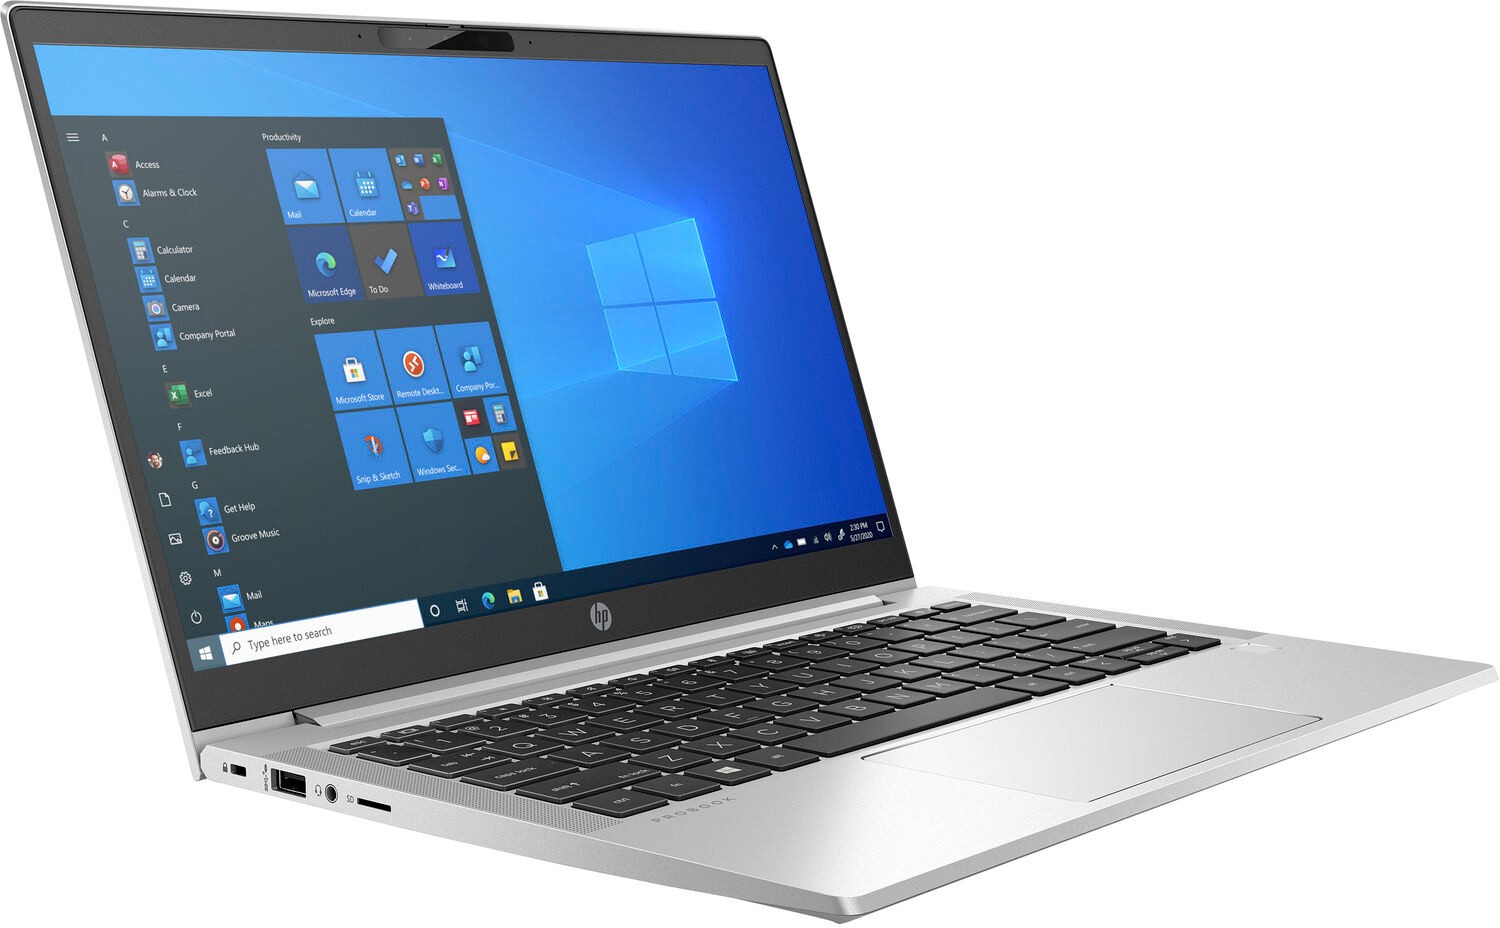 Ноутбук HP НP ProBook 430 G8 Core i5-1135G7 2.4GHz, 13.3 FHD (1920x1080) AG 8GB DDR4 (1),256GB SSD,45Wh LL,Service Door,FPR,1.5kg,1y,Silver,DOS-39391